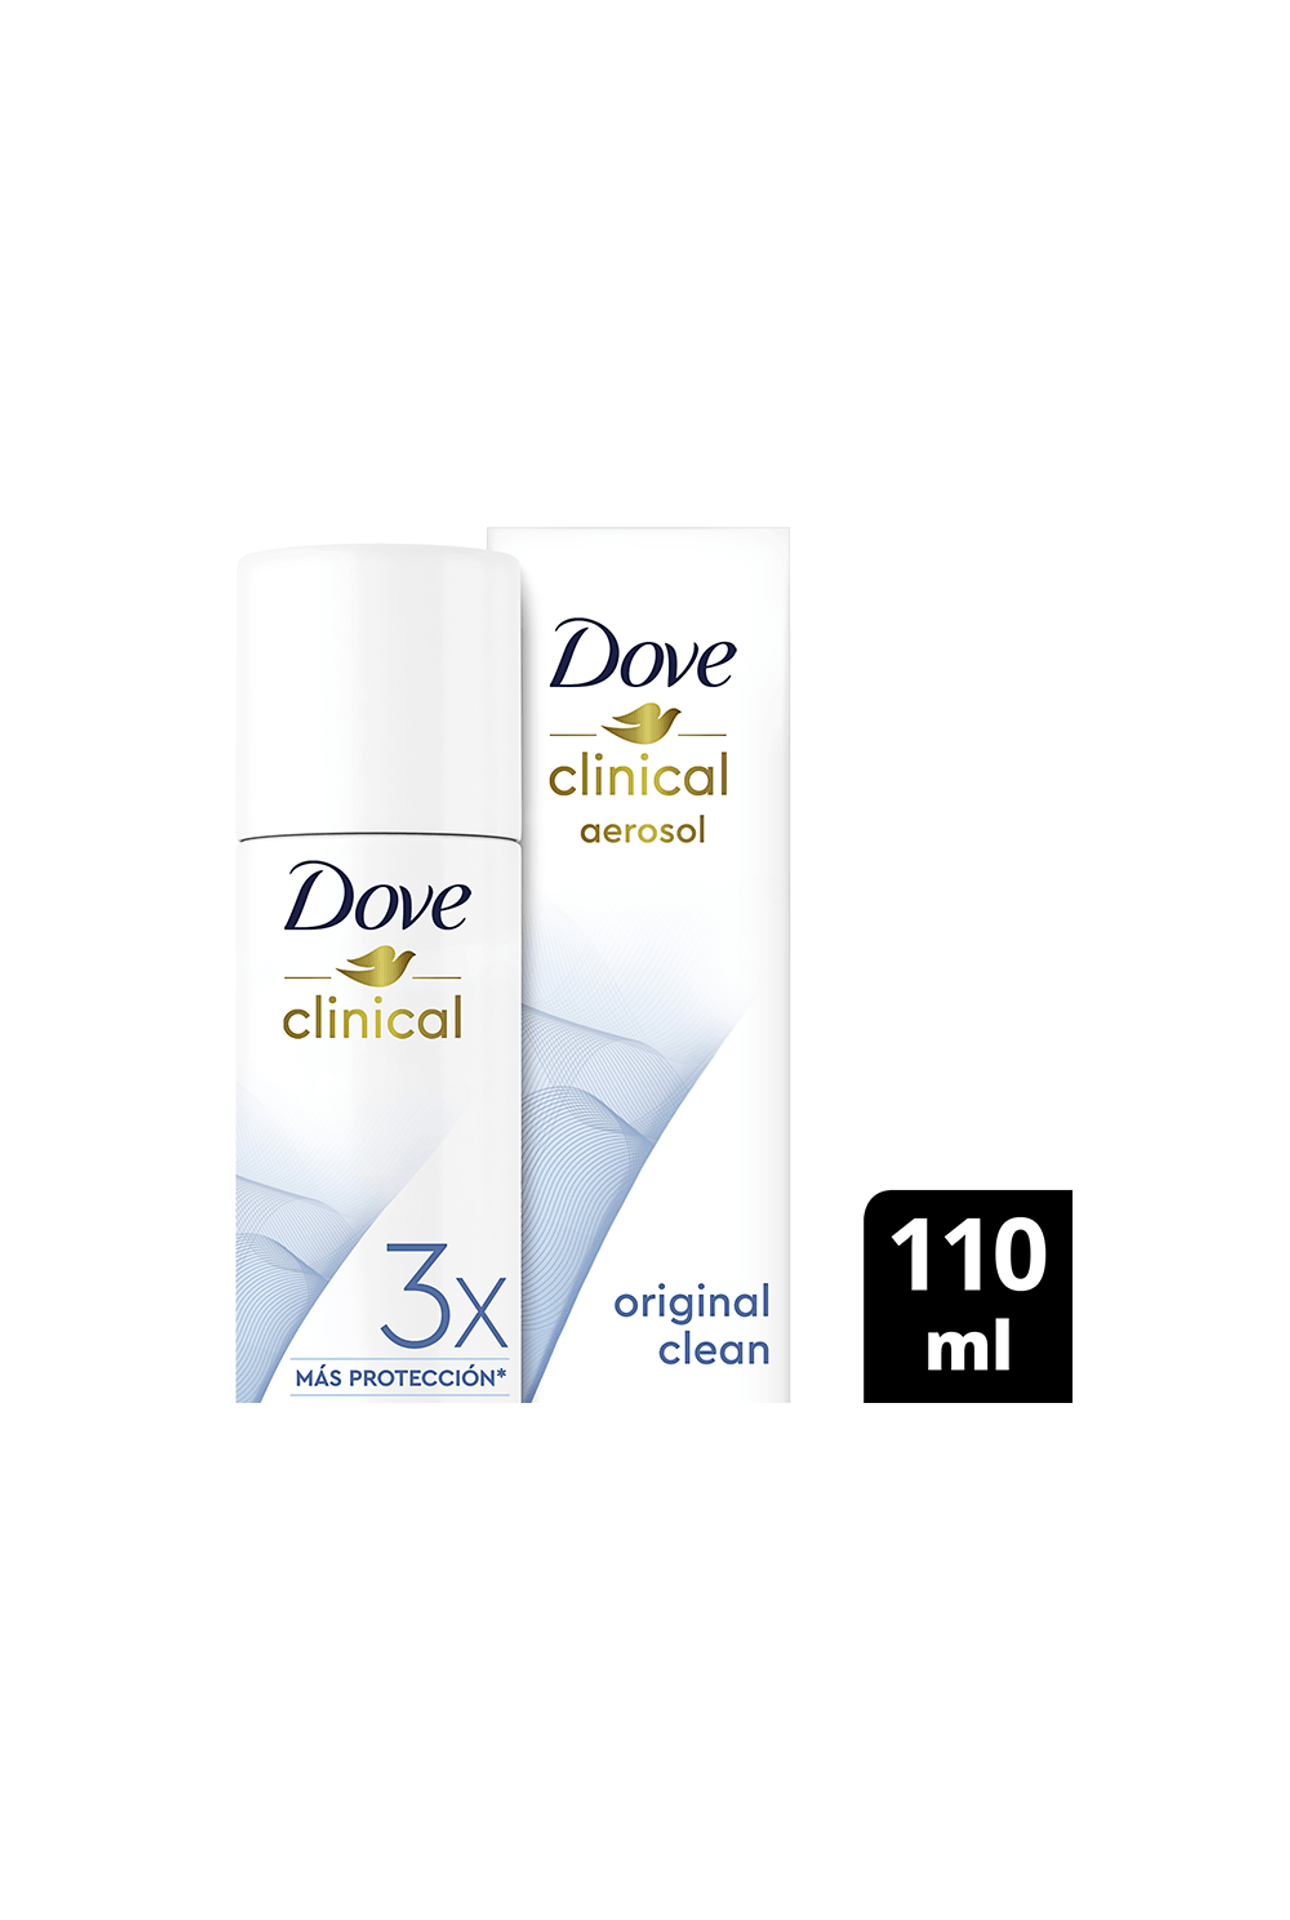 Dove-Antitranspirante-Dove-Clinical-Original-x-110-ml-7791293046747_img1